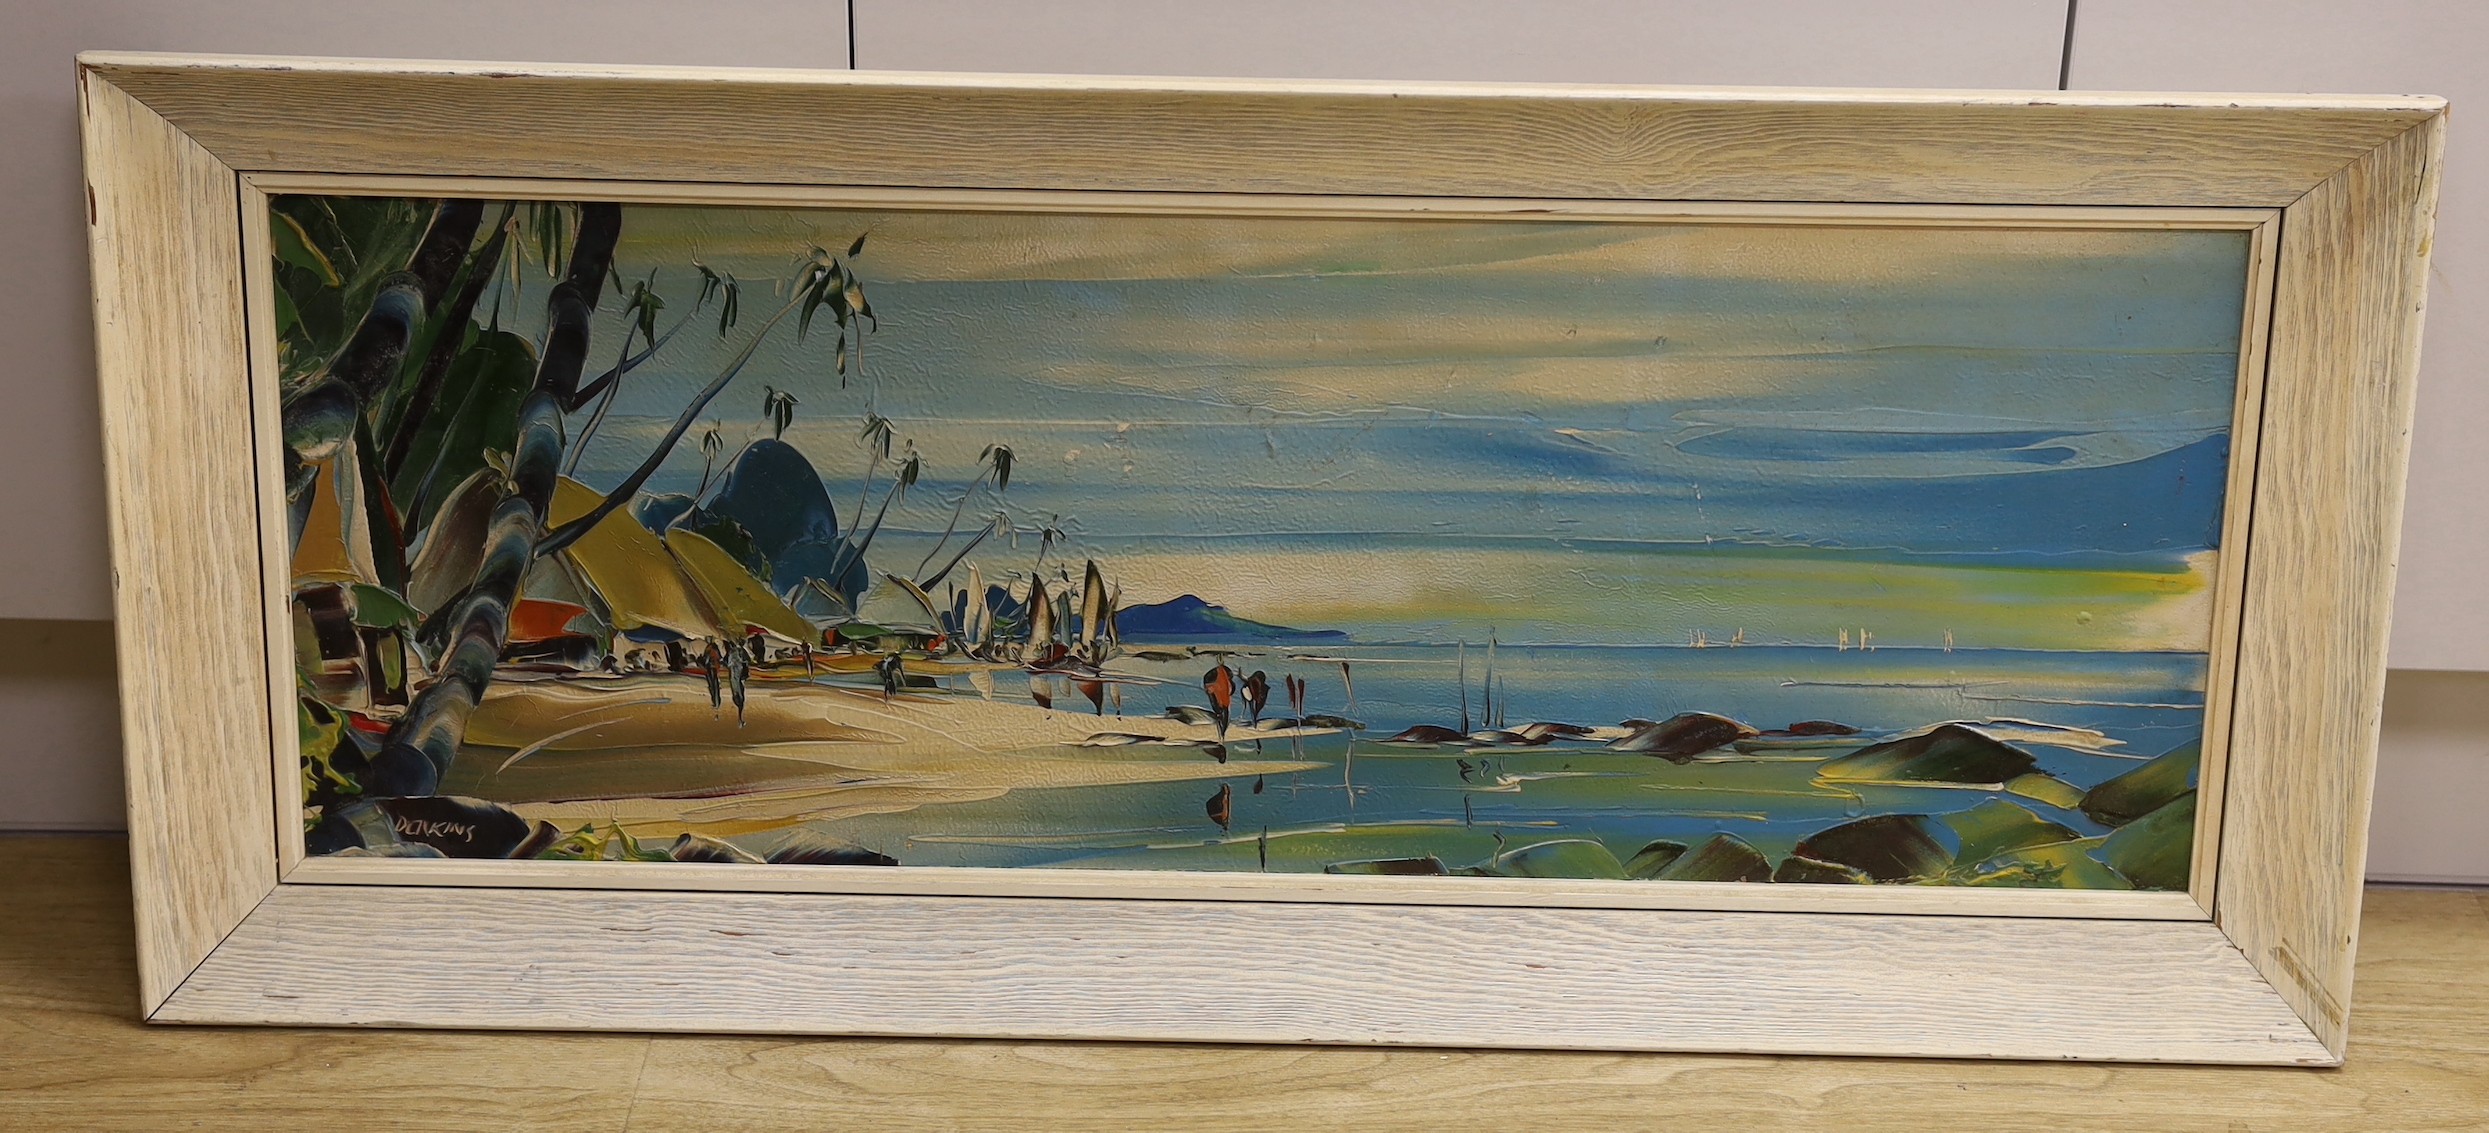 George Deakins (1911-1992), oil on board, 'Beach scene, St Lucia', signed, 30 x 83cm